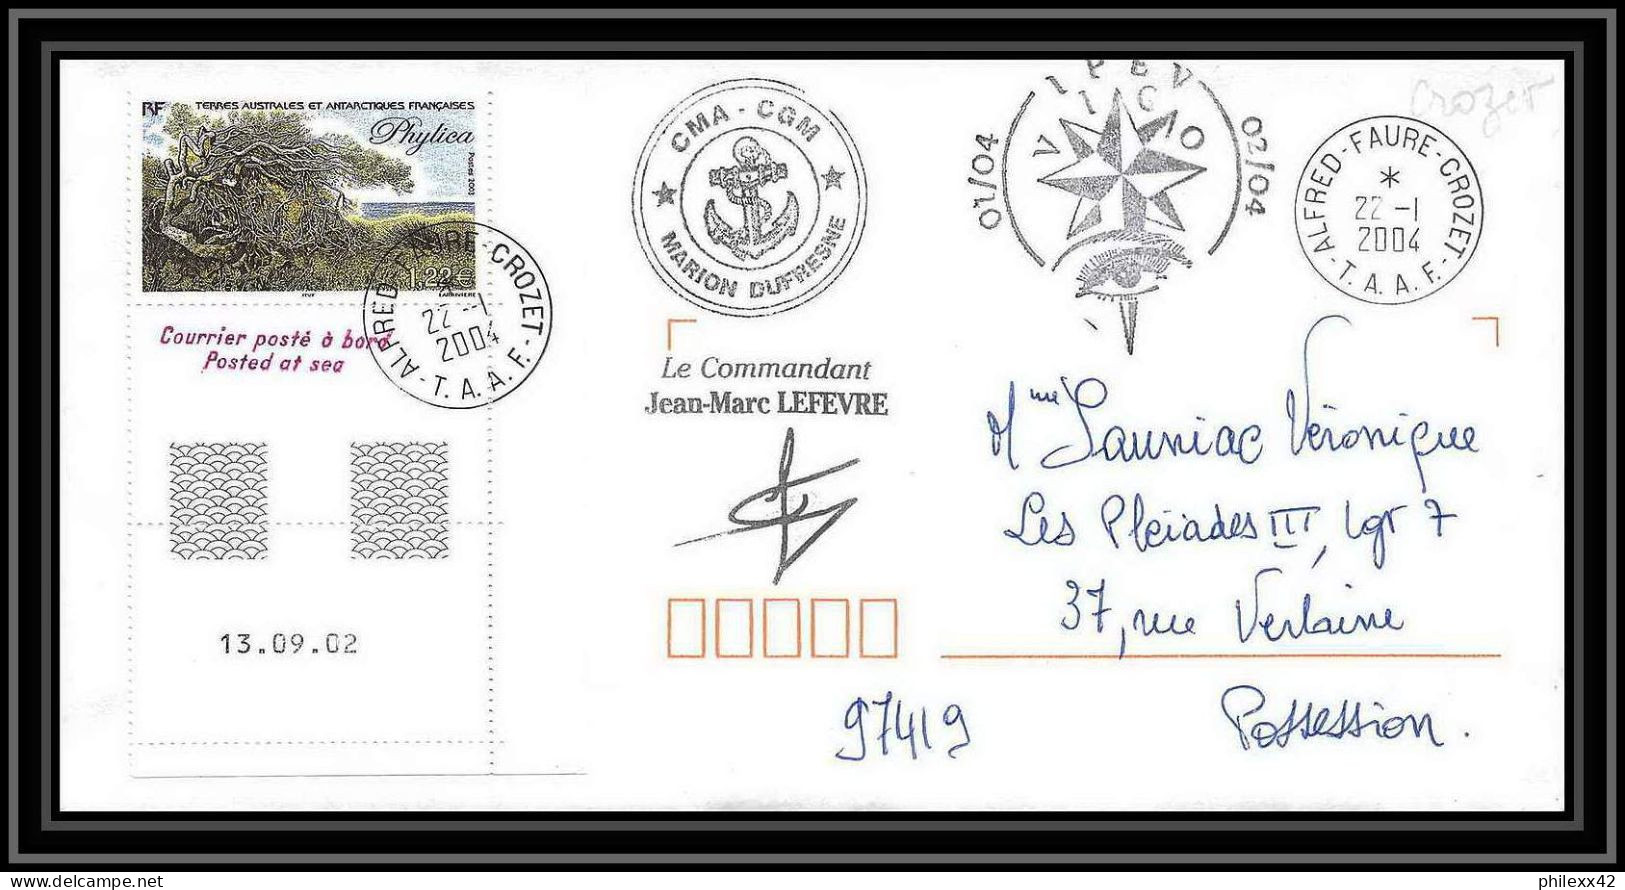 2429 Dufresne 2 Signé Signed 22/1/2004 IPEV VIGO N°363 ANTARCTIC Terres Australes (taaf) Lettre Cover Coin Daté - Lettres & Documents